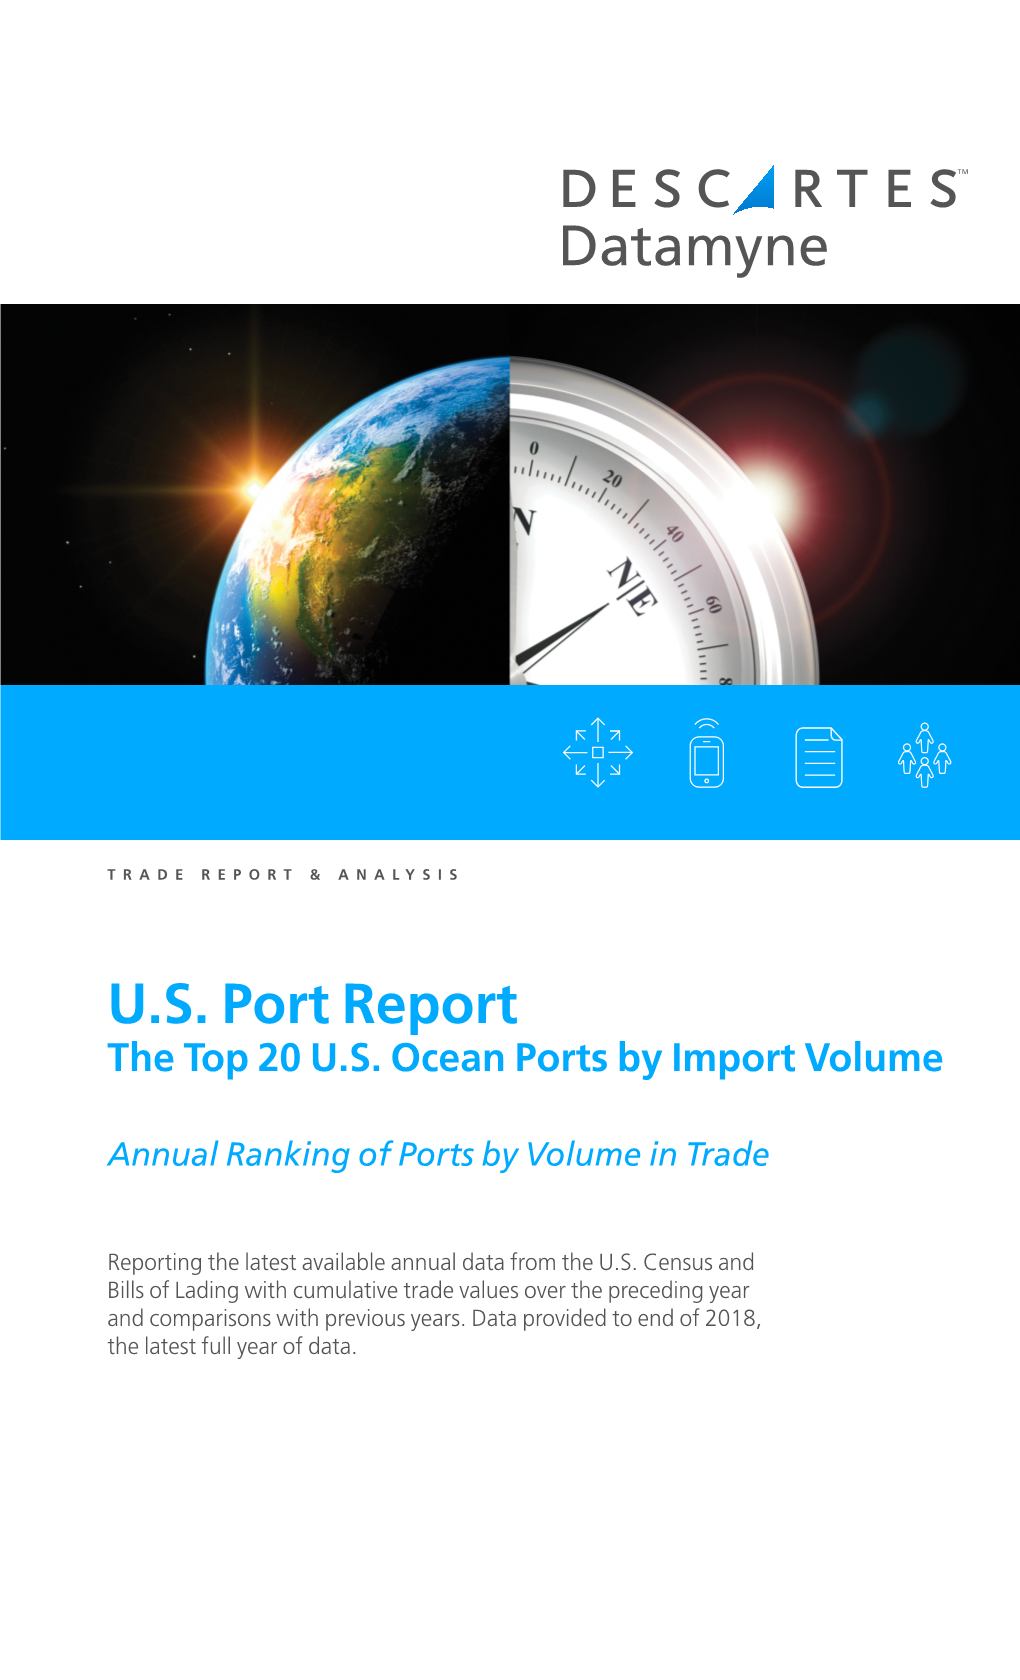 U.S. Port Report the Top 20 U.S